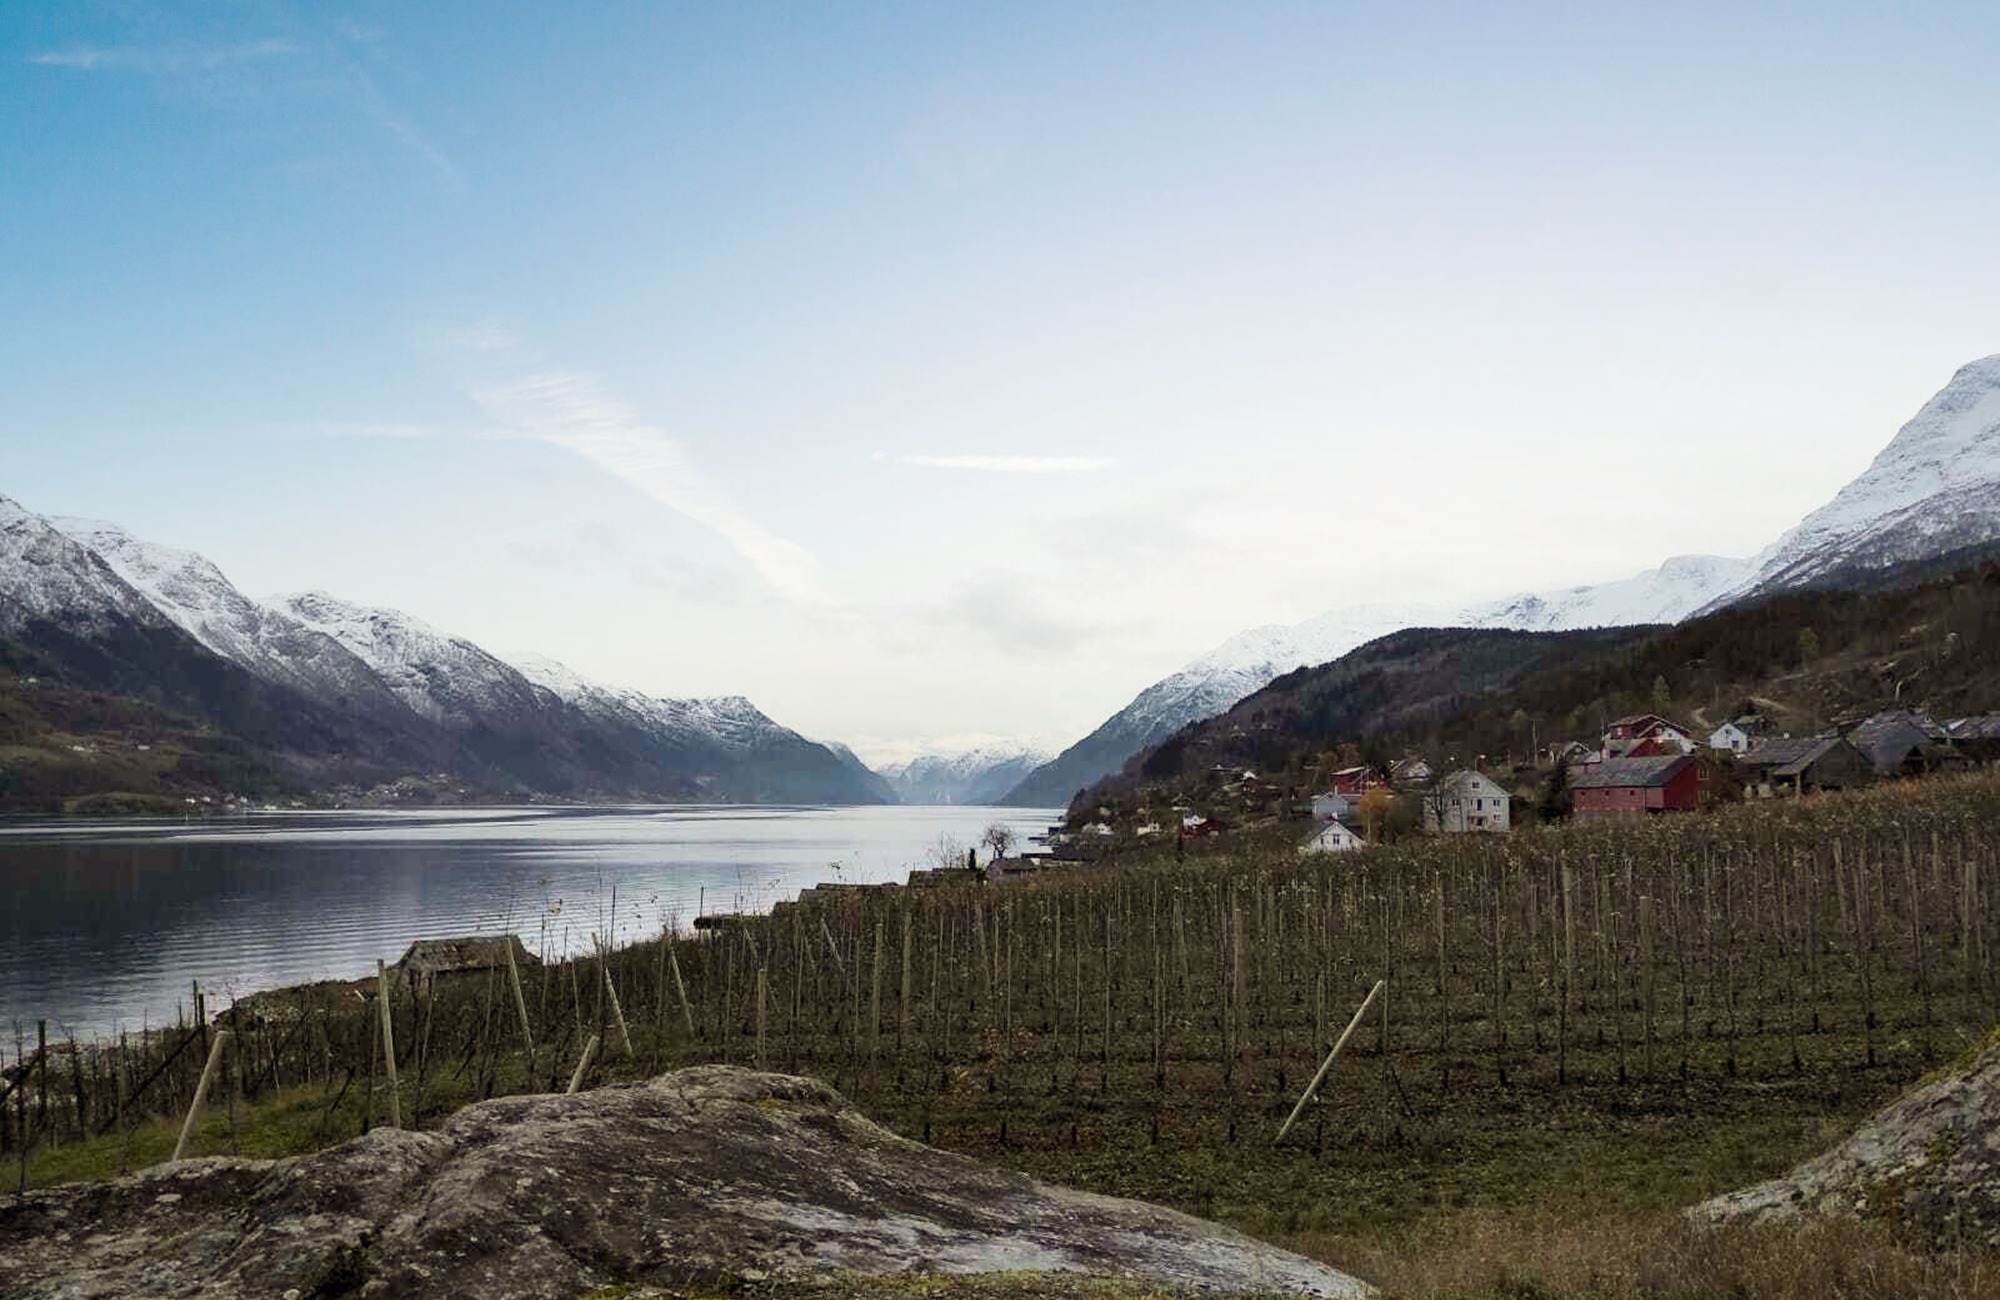 Voyage Hardangerfjord - Village d'Agatunet - Amplitudes